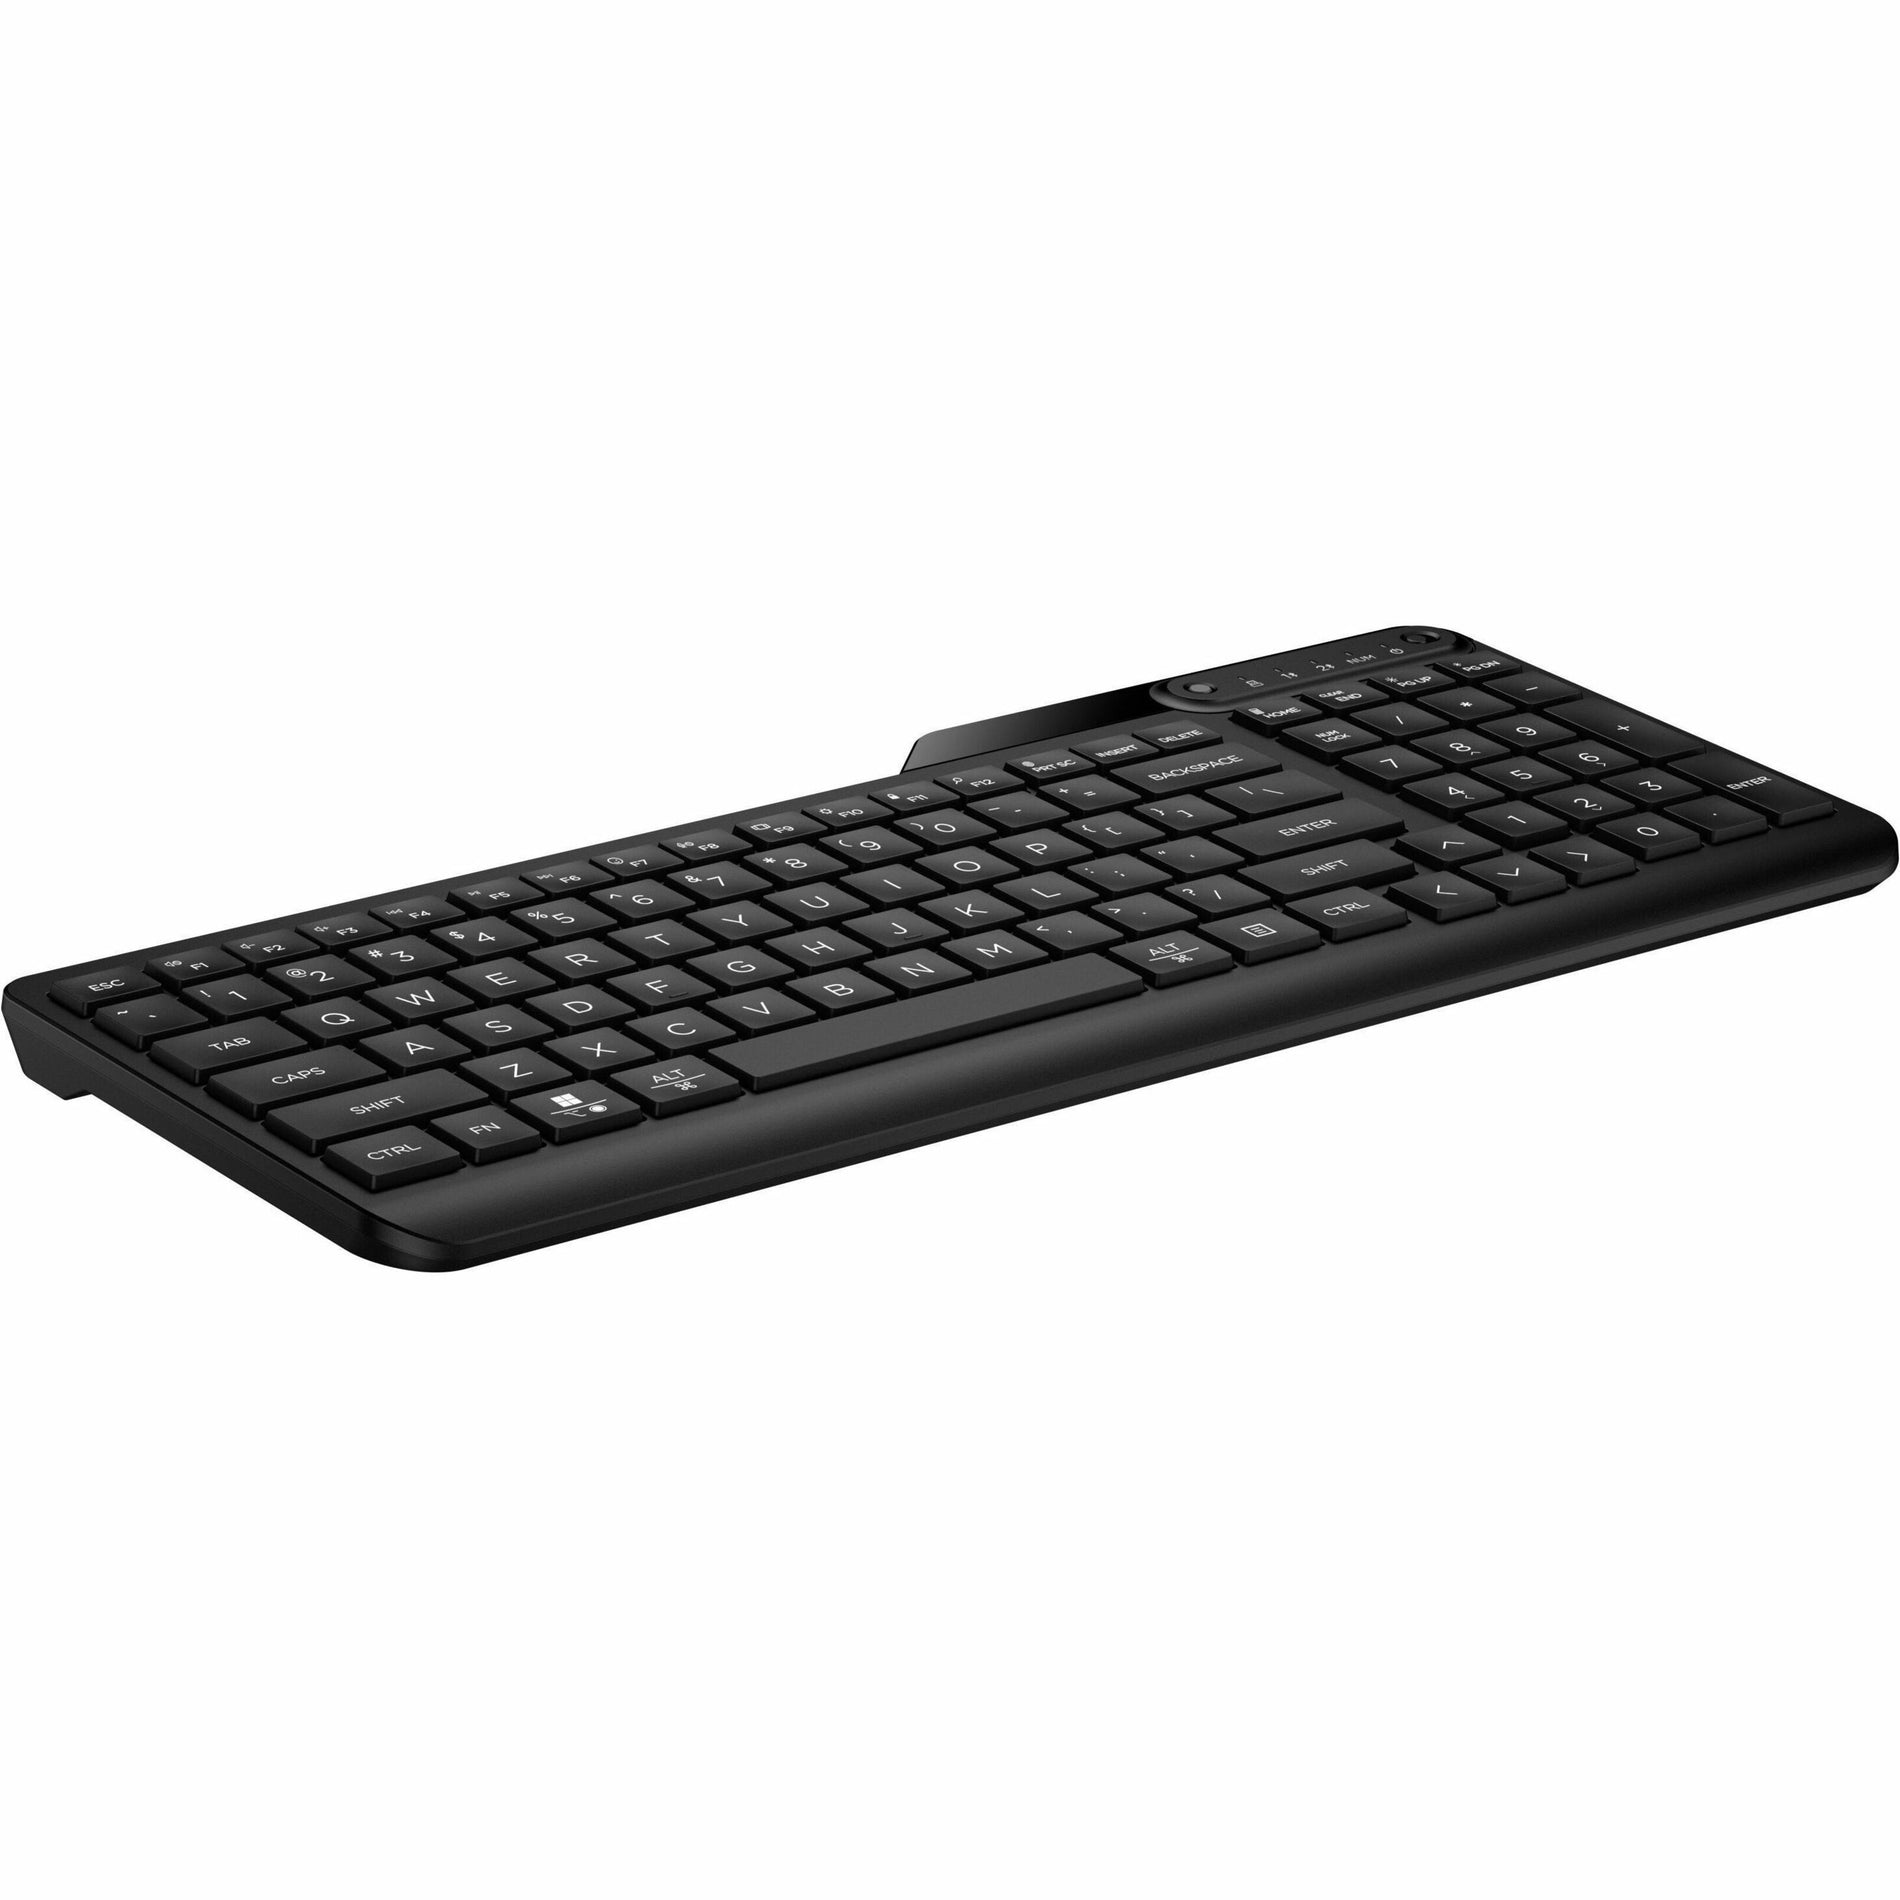 HP 475 Dual-Mode Wireless Keyboard, Compact Keyboard, Spill Resistant, Jet Black